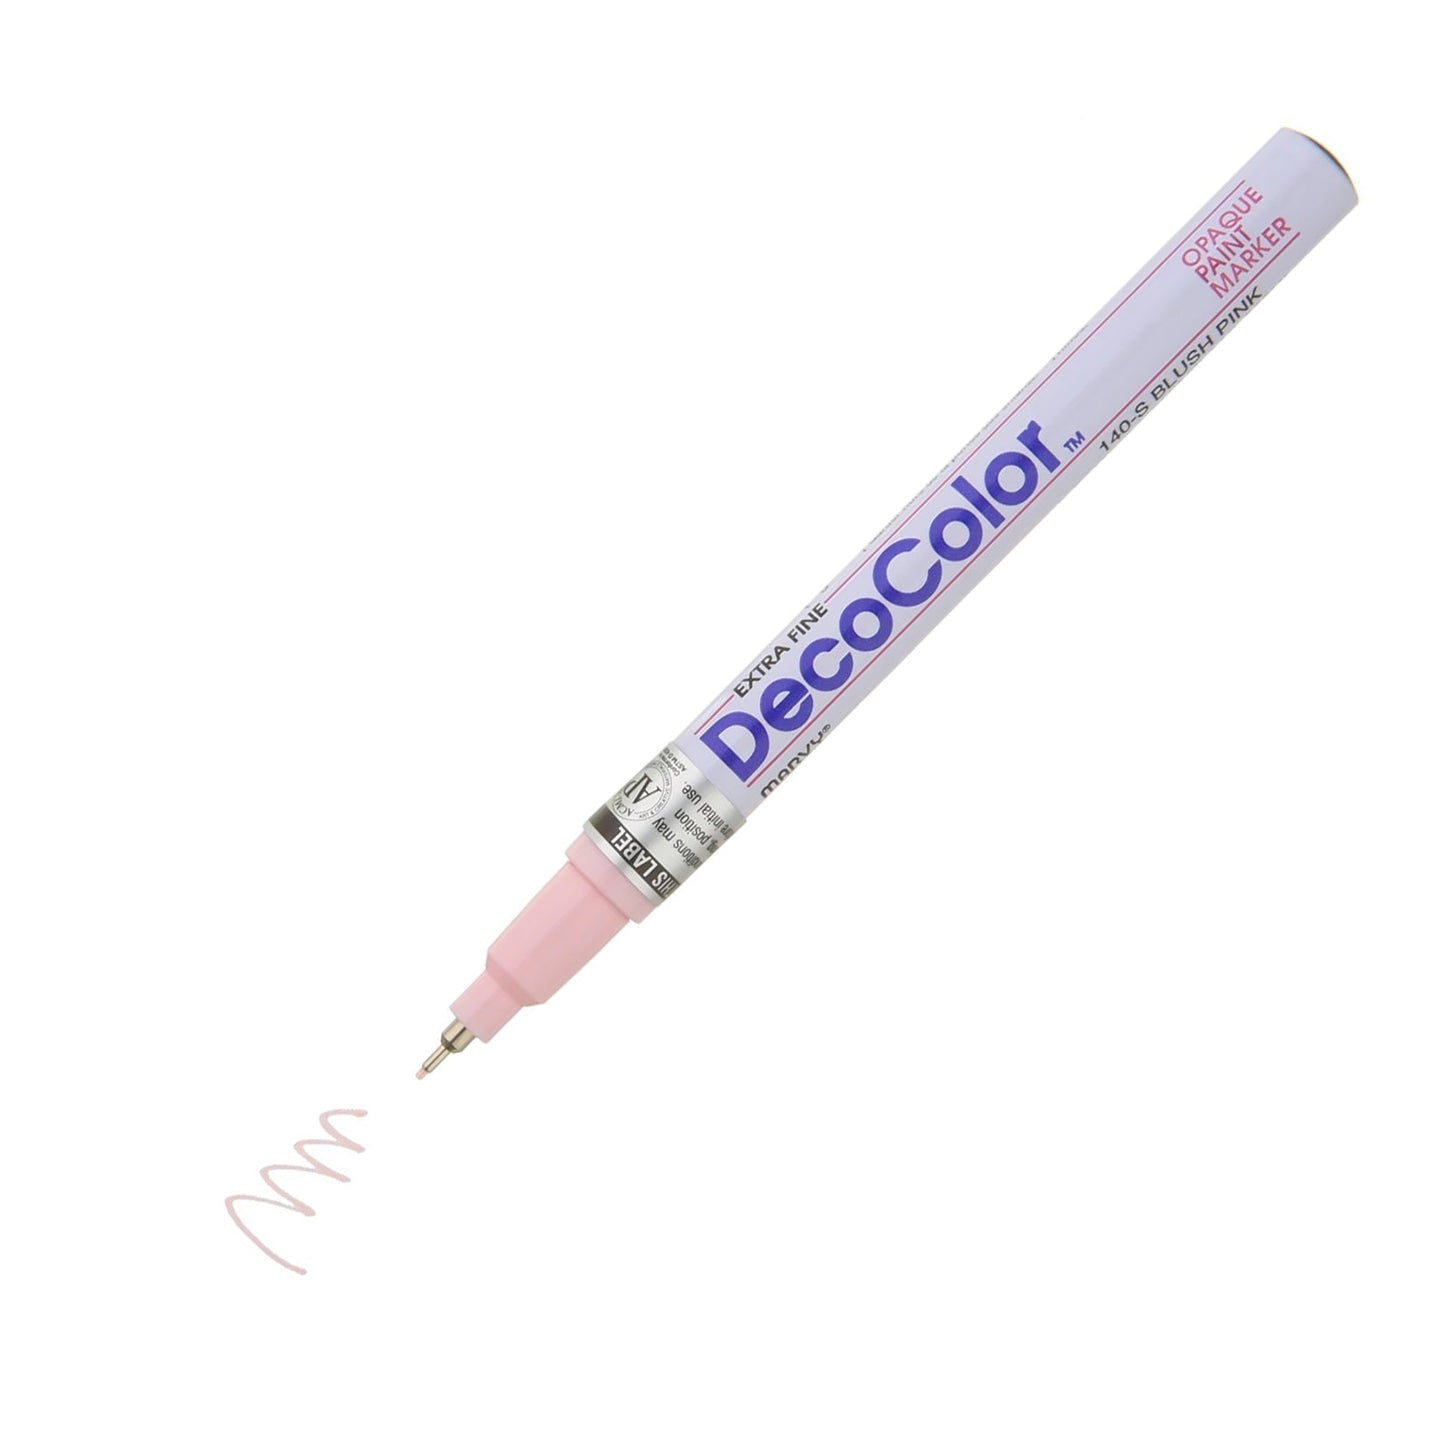 Decocolor Paint Marker, 0.8mm Extra Fine Specialtech Tip